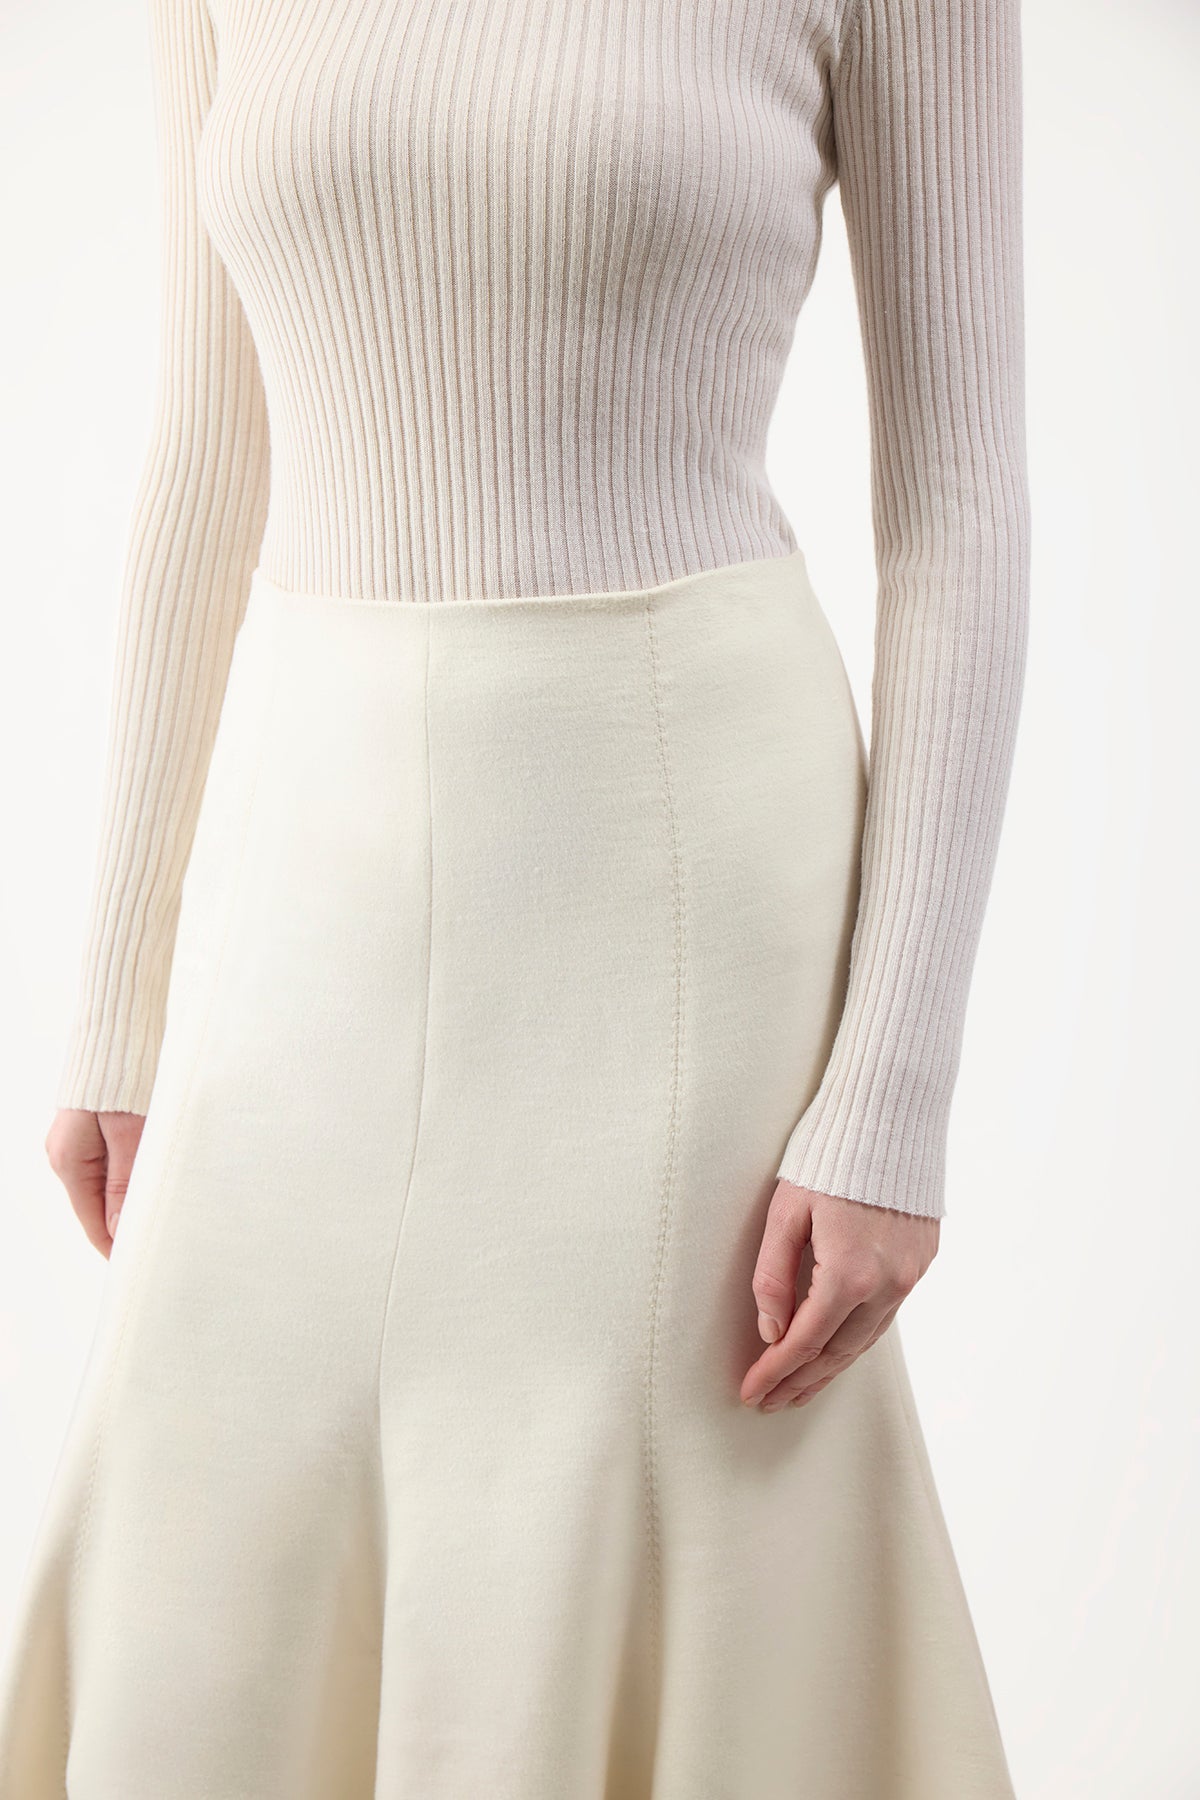 Amy Skirt in Ivory Winter Silk